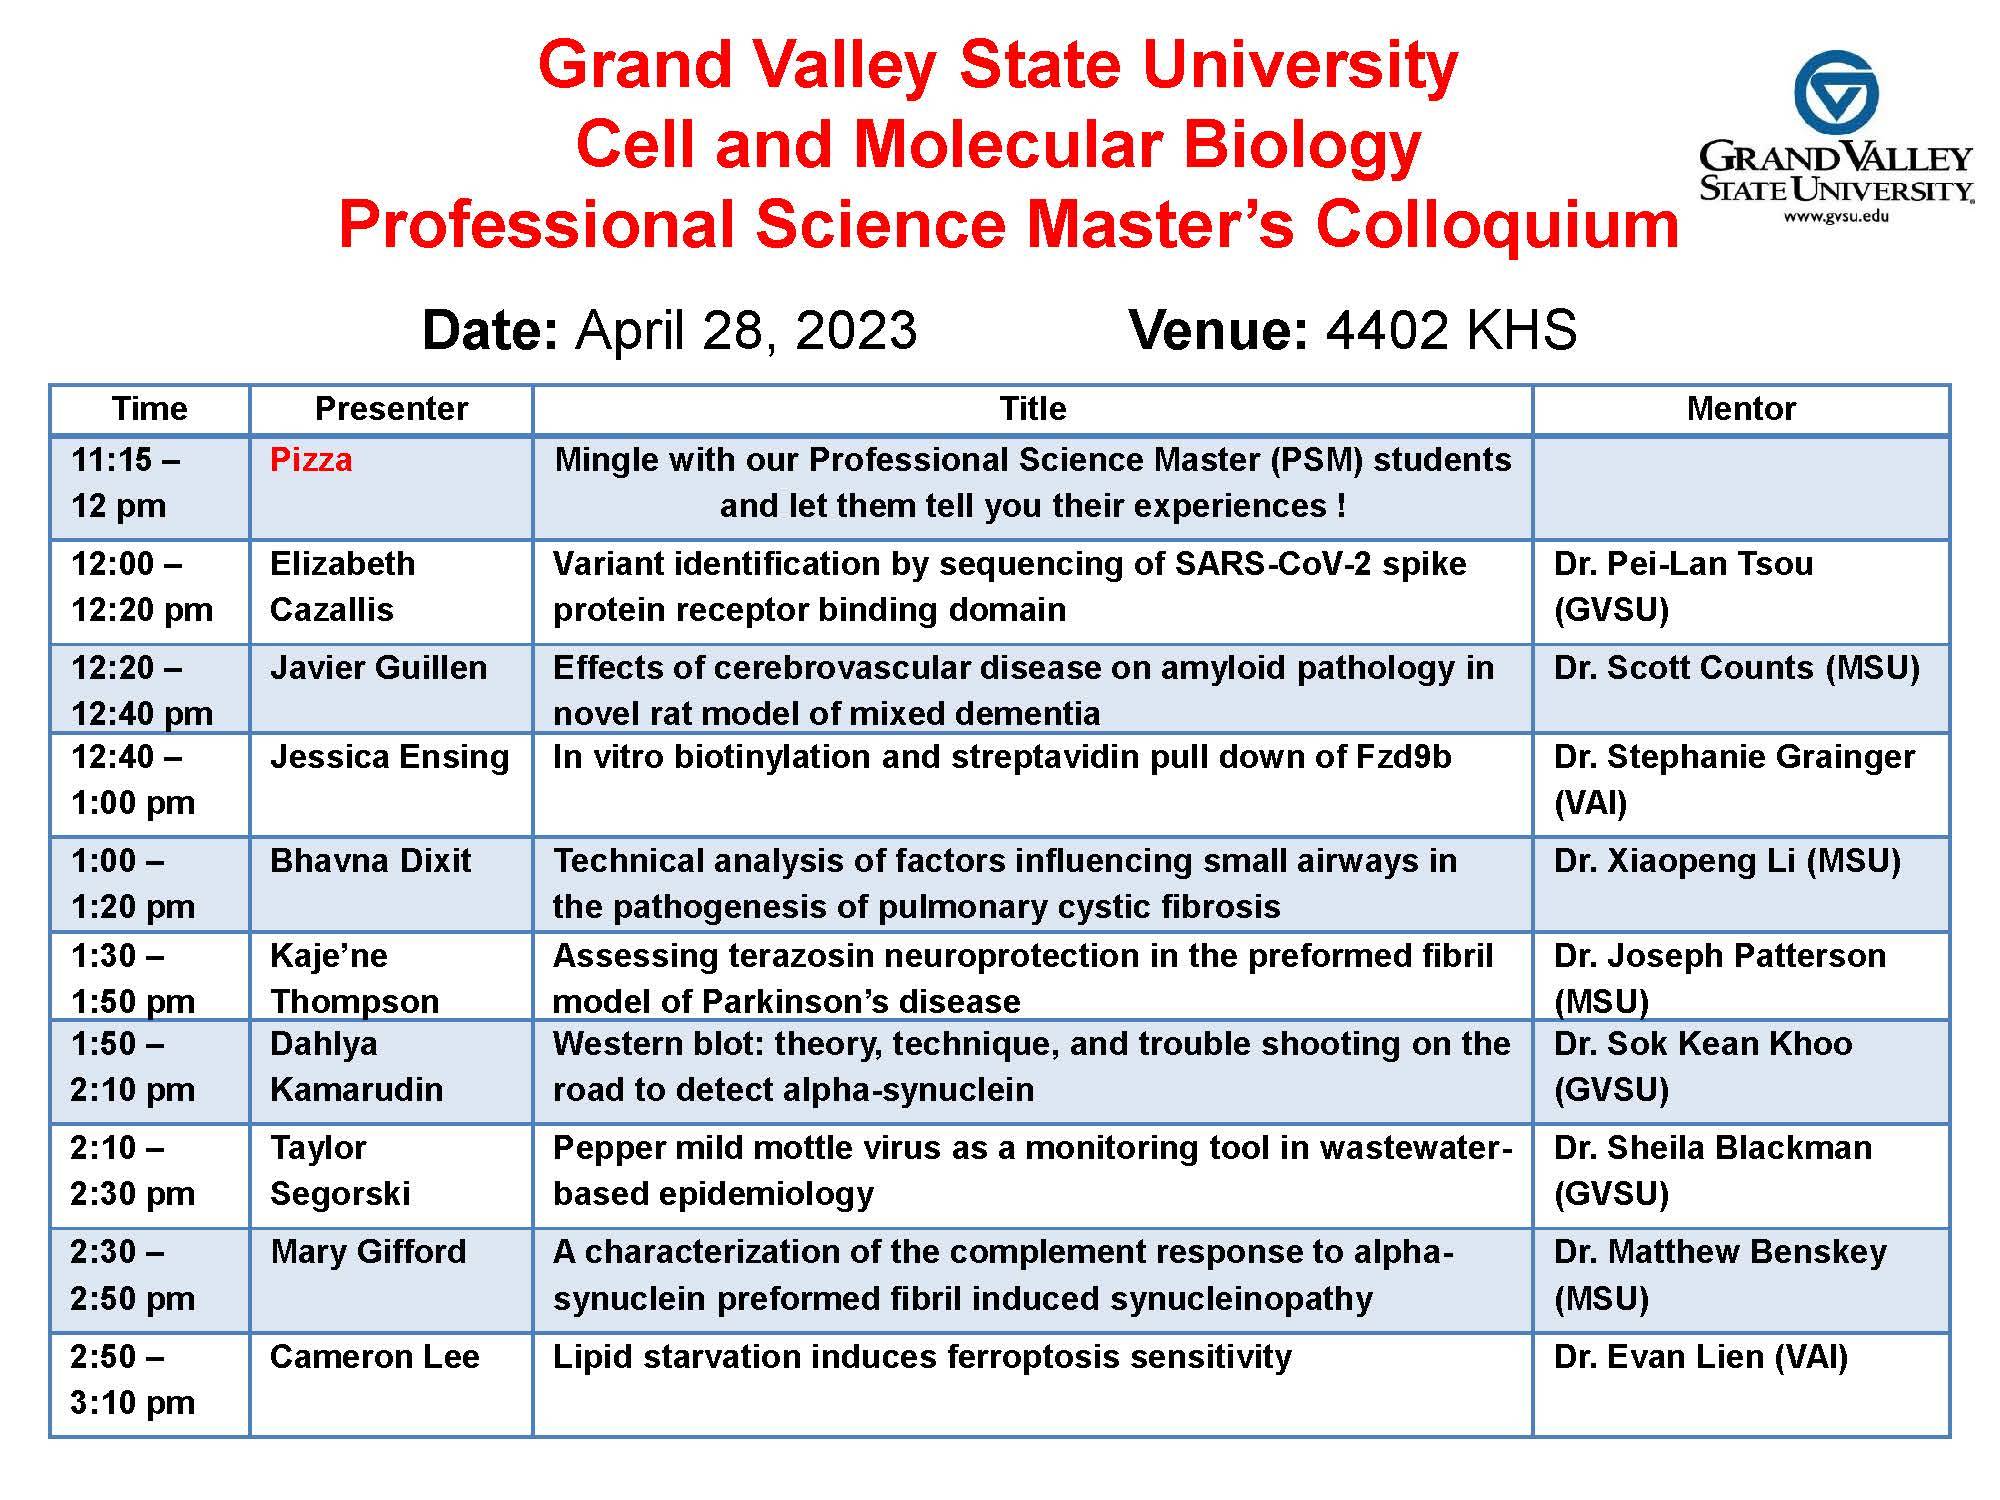 Professional Science Master's Colloquium Presenters Schedule for April 28, 2023